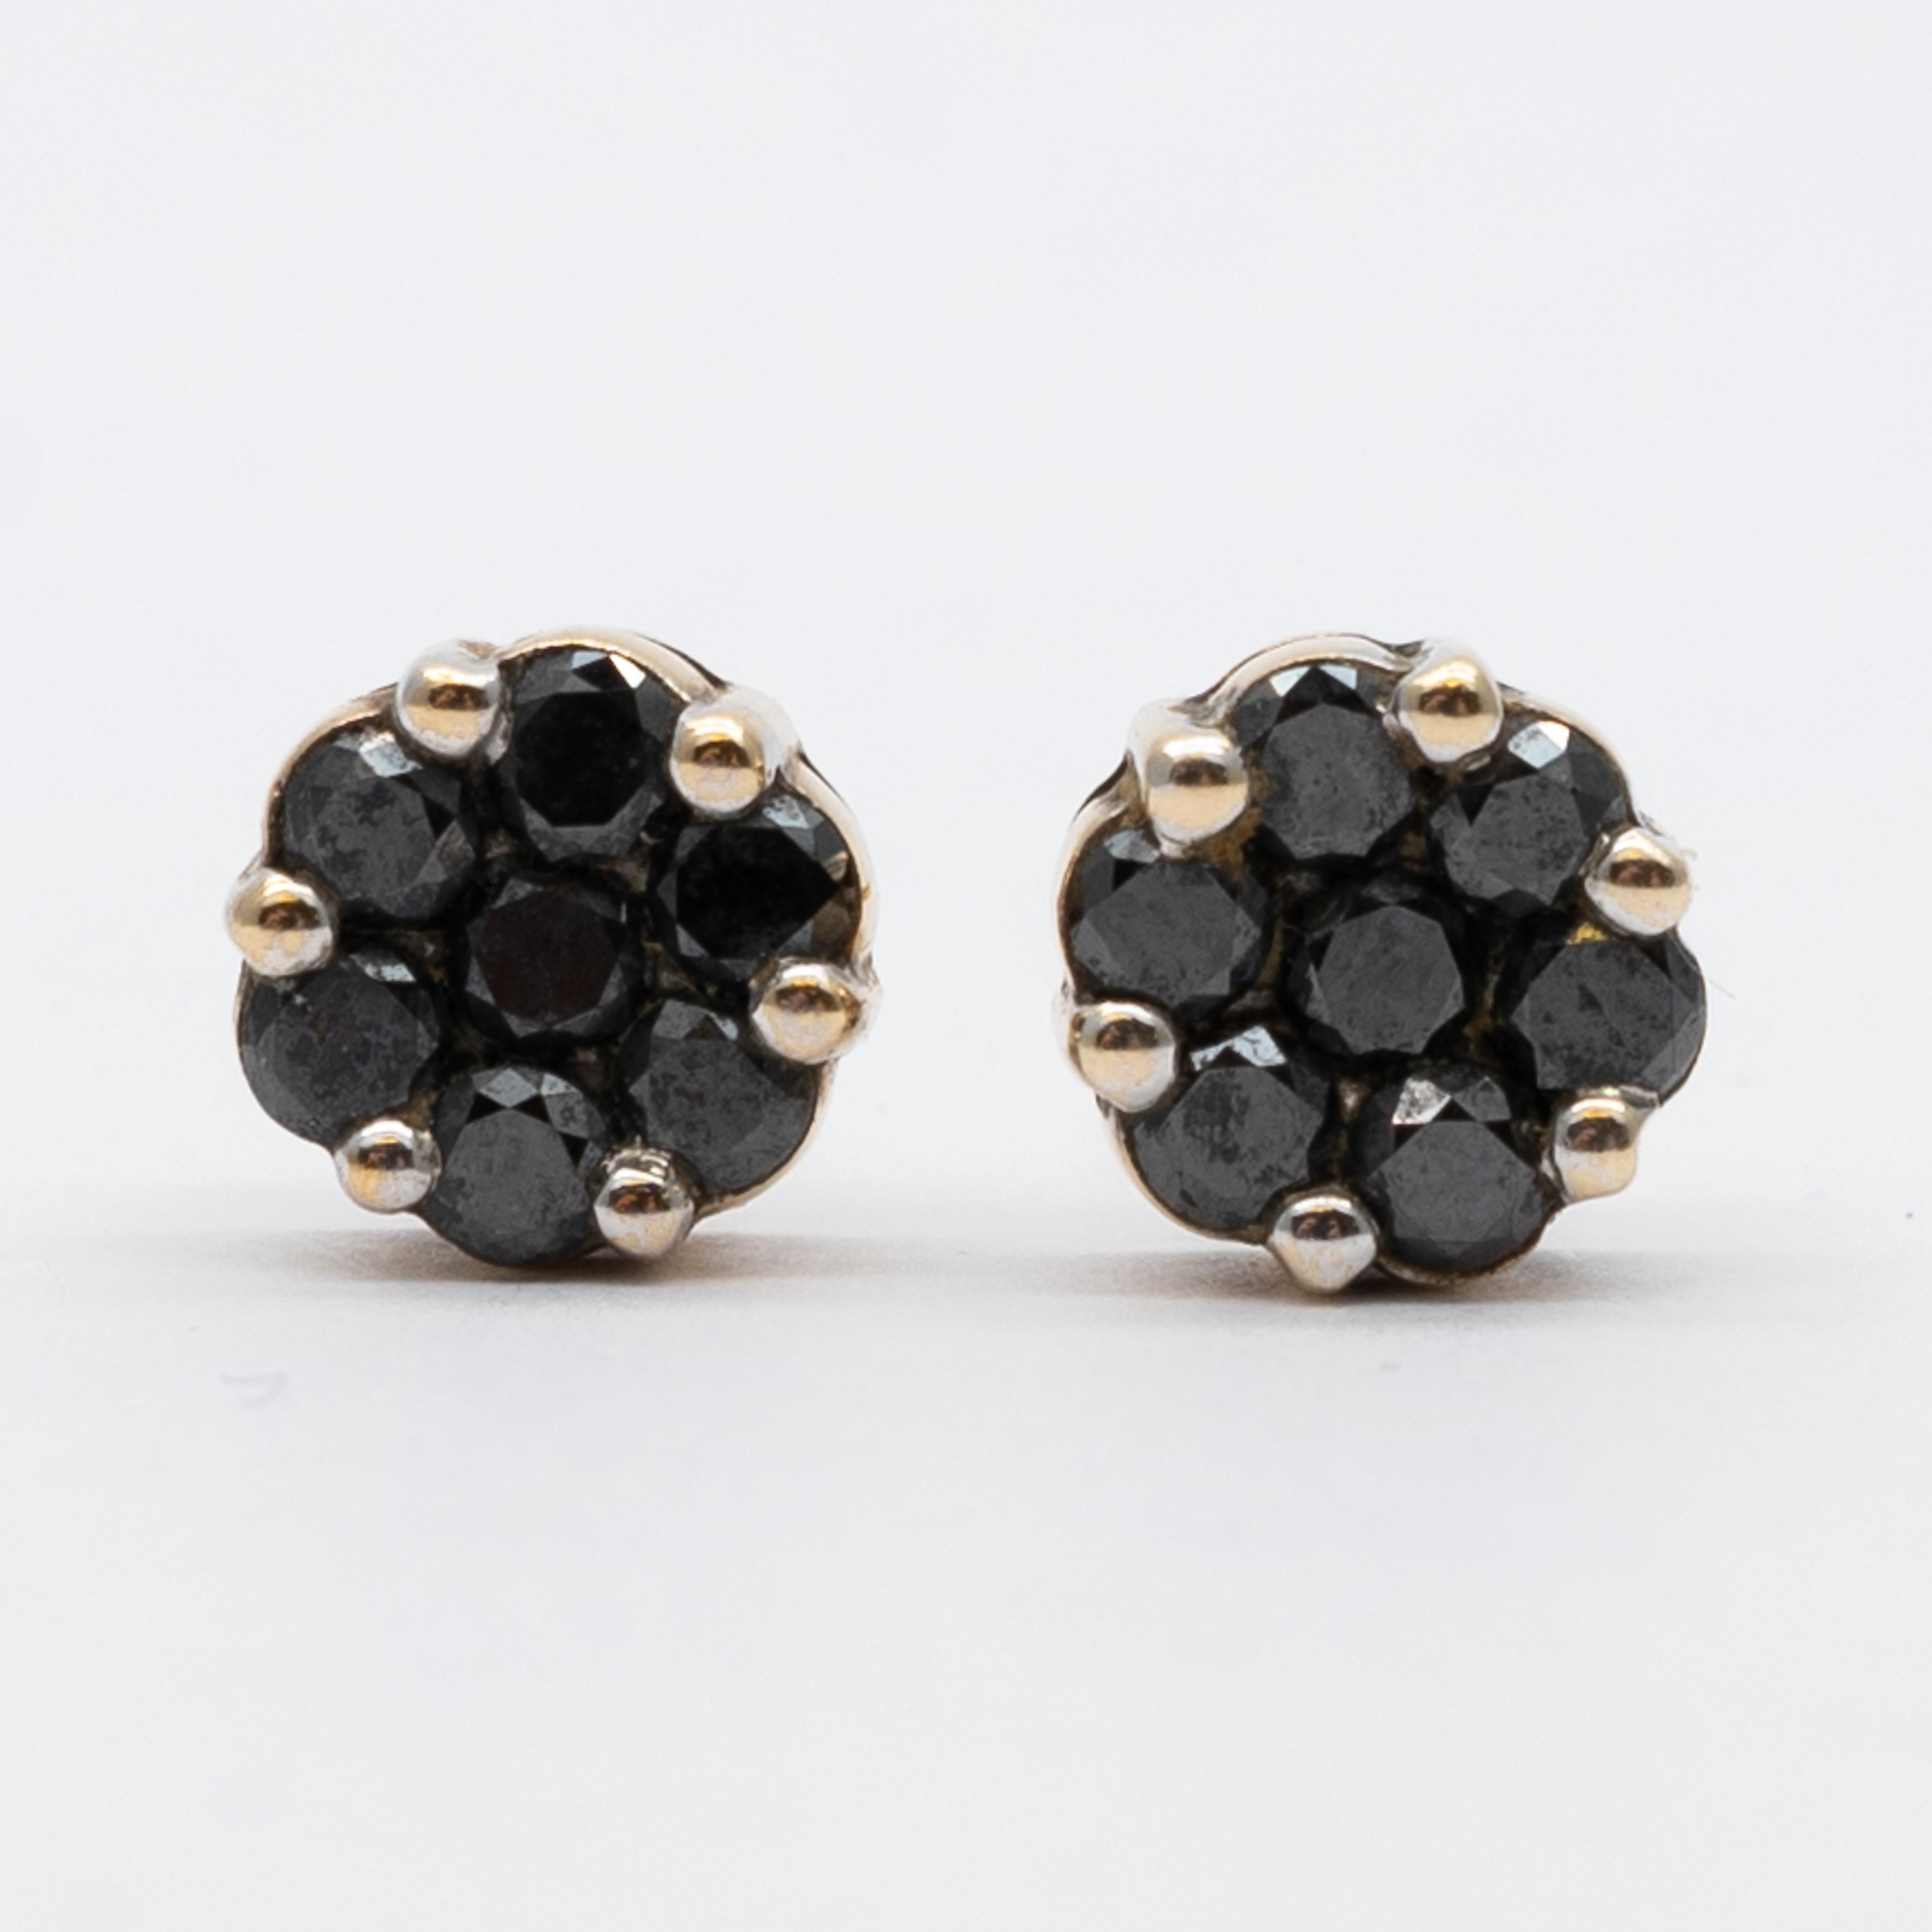 A pair of 9ct yellow gold black diamond stud earrings